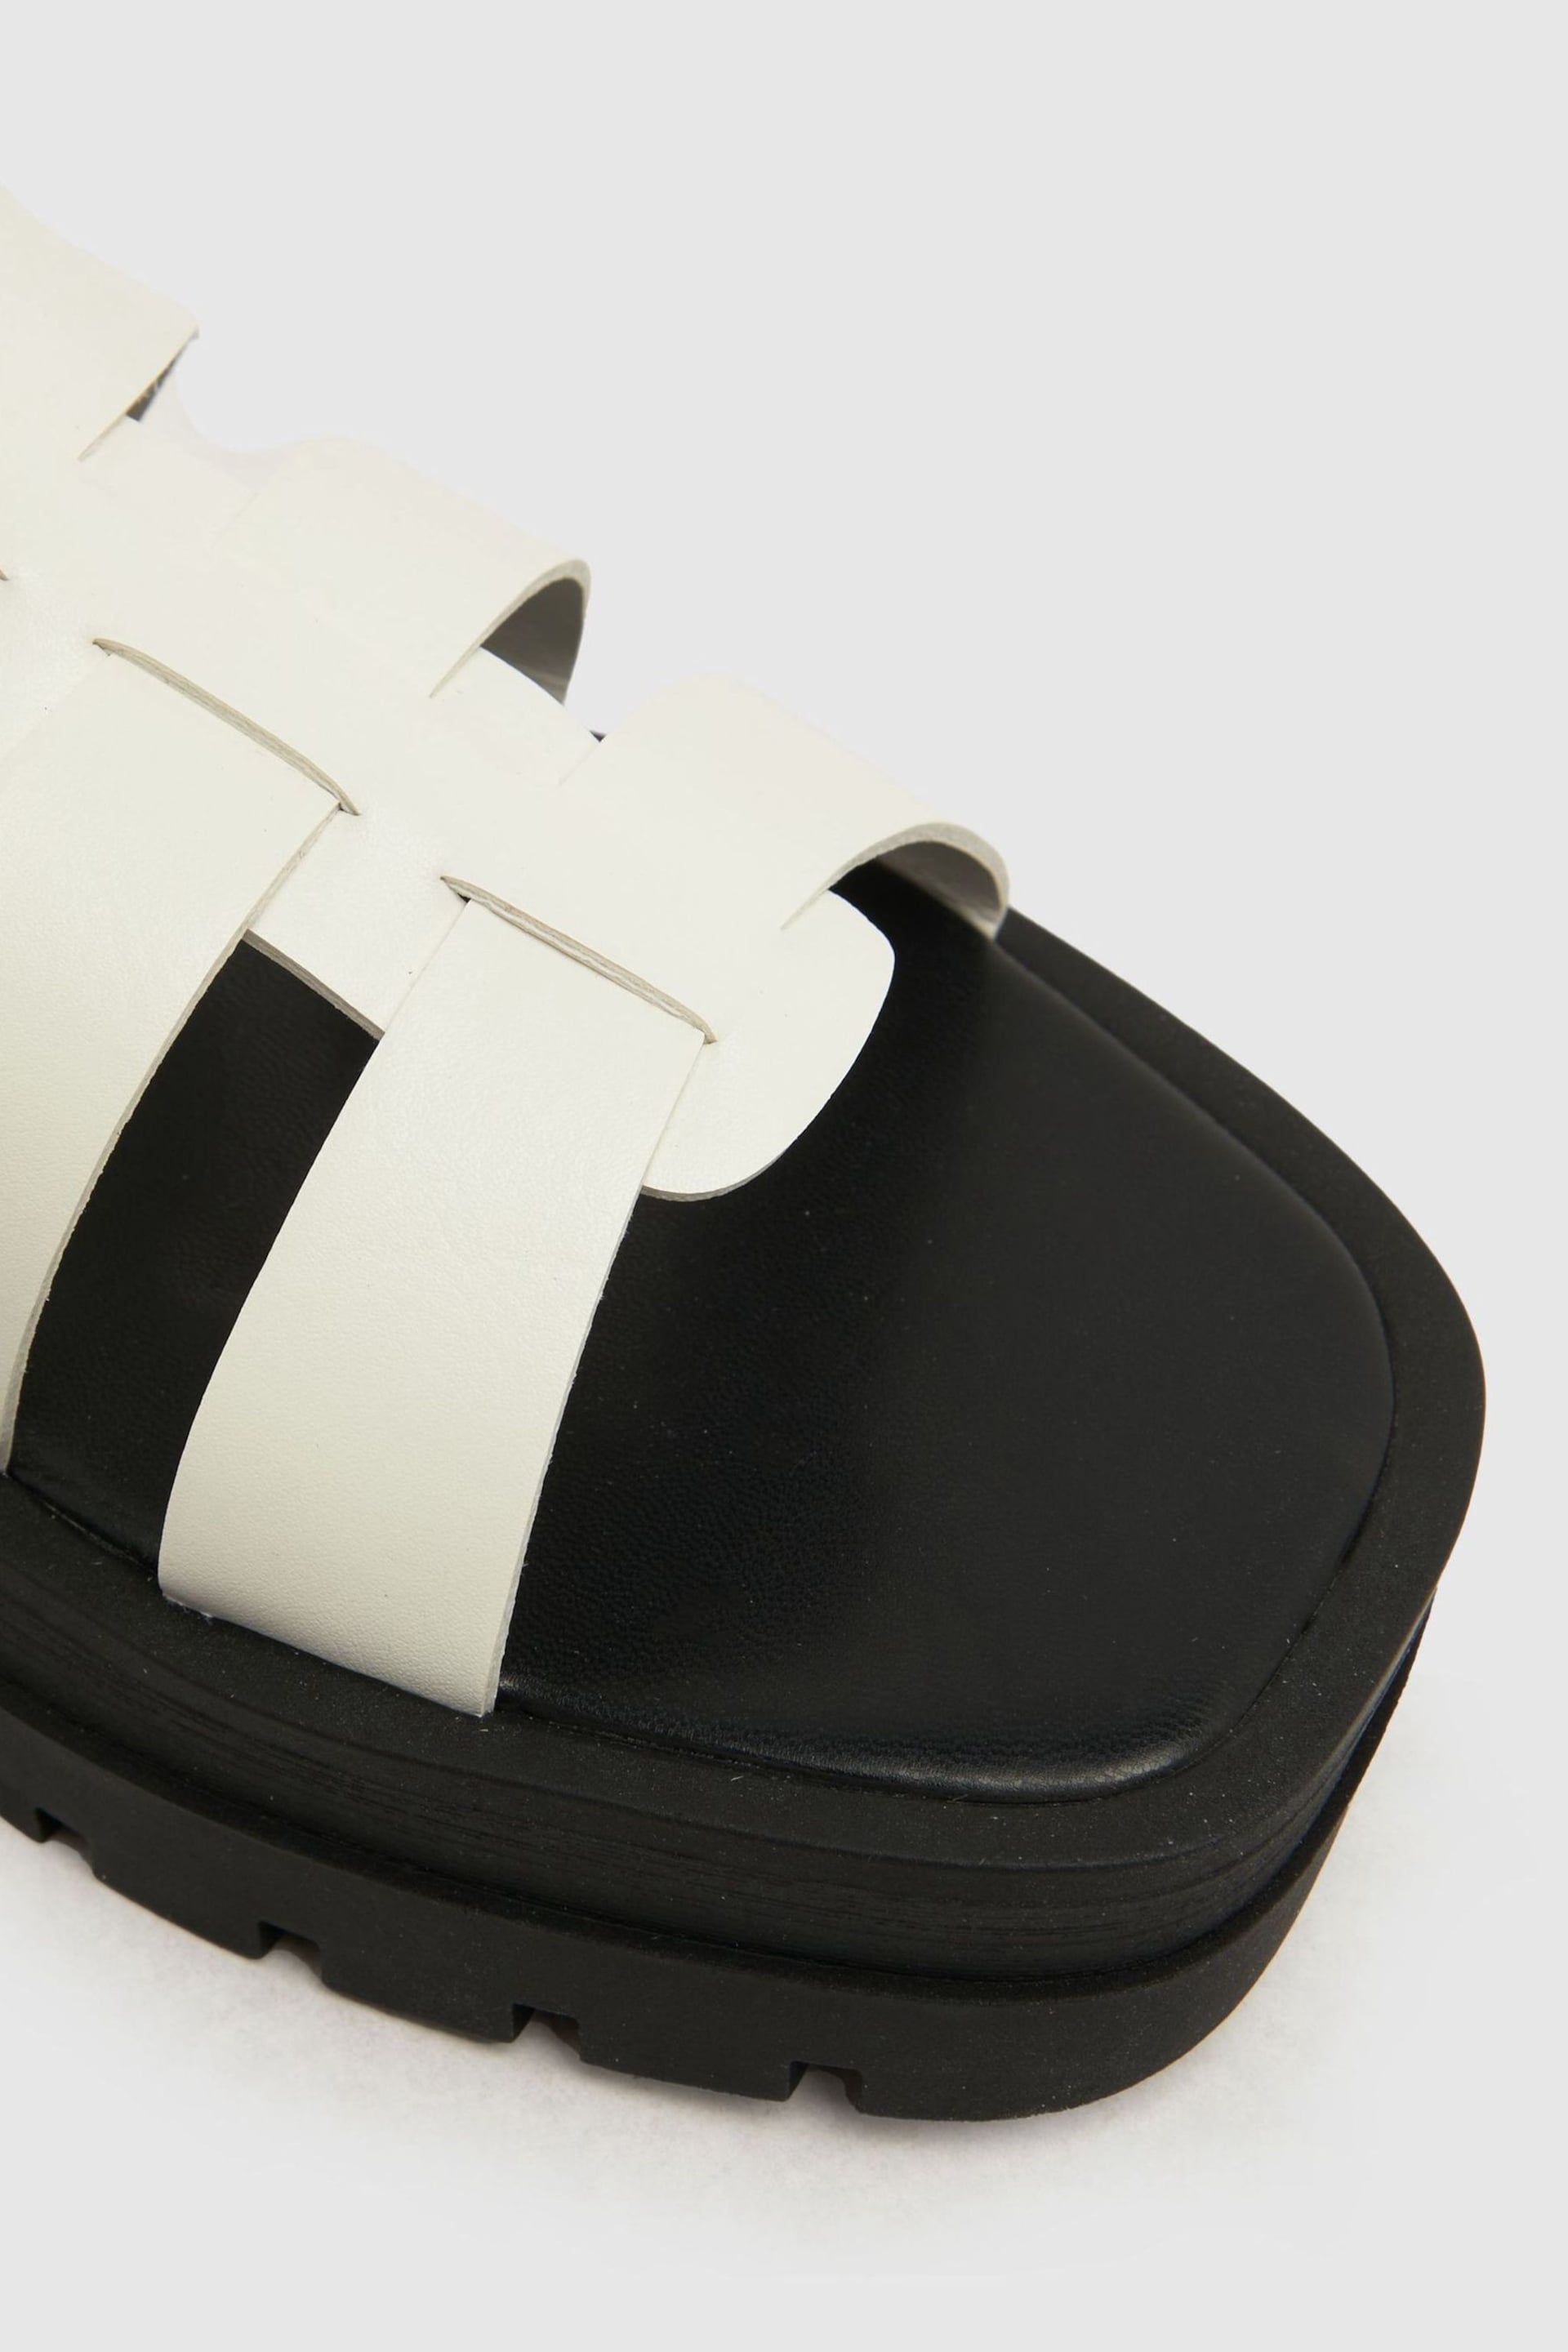 Schuh Tobin Chunky Gladiator Sandals - Image 2 of 4